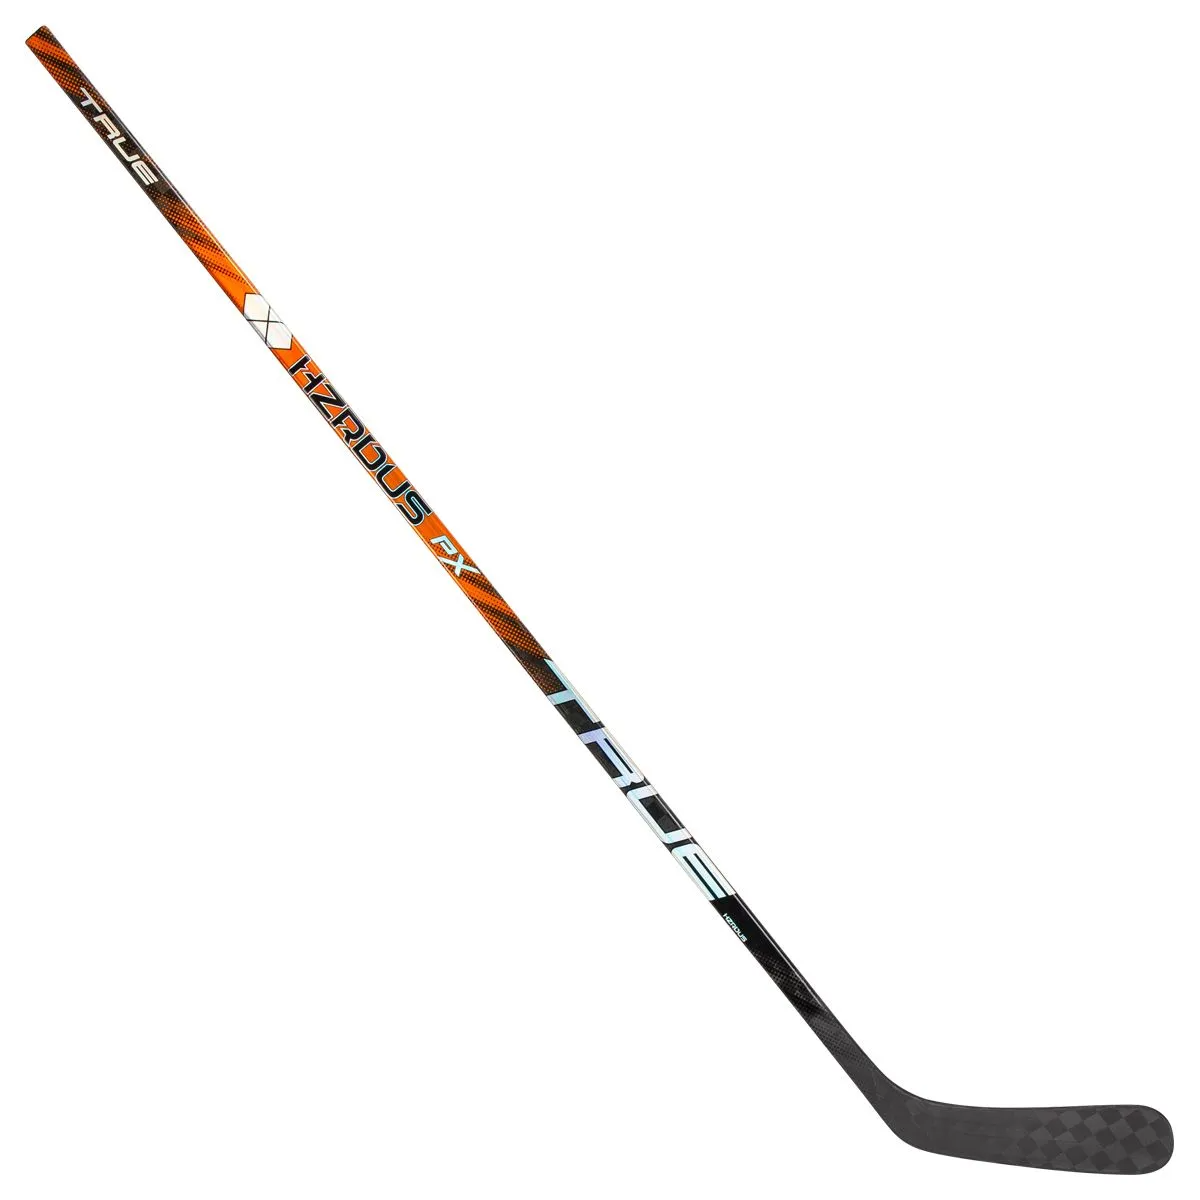 TRUE Hzrdus PX Senior Composite Hockey Stick